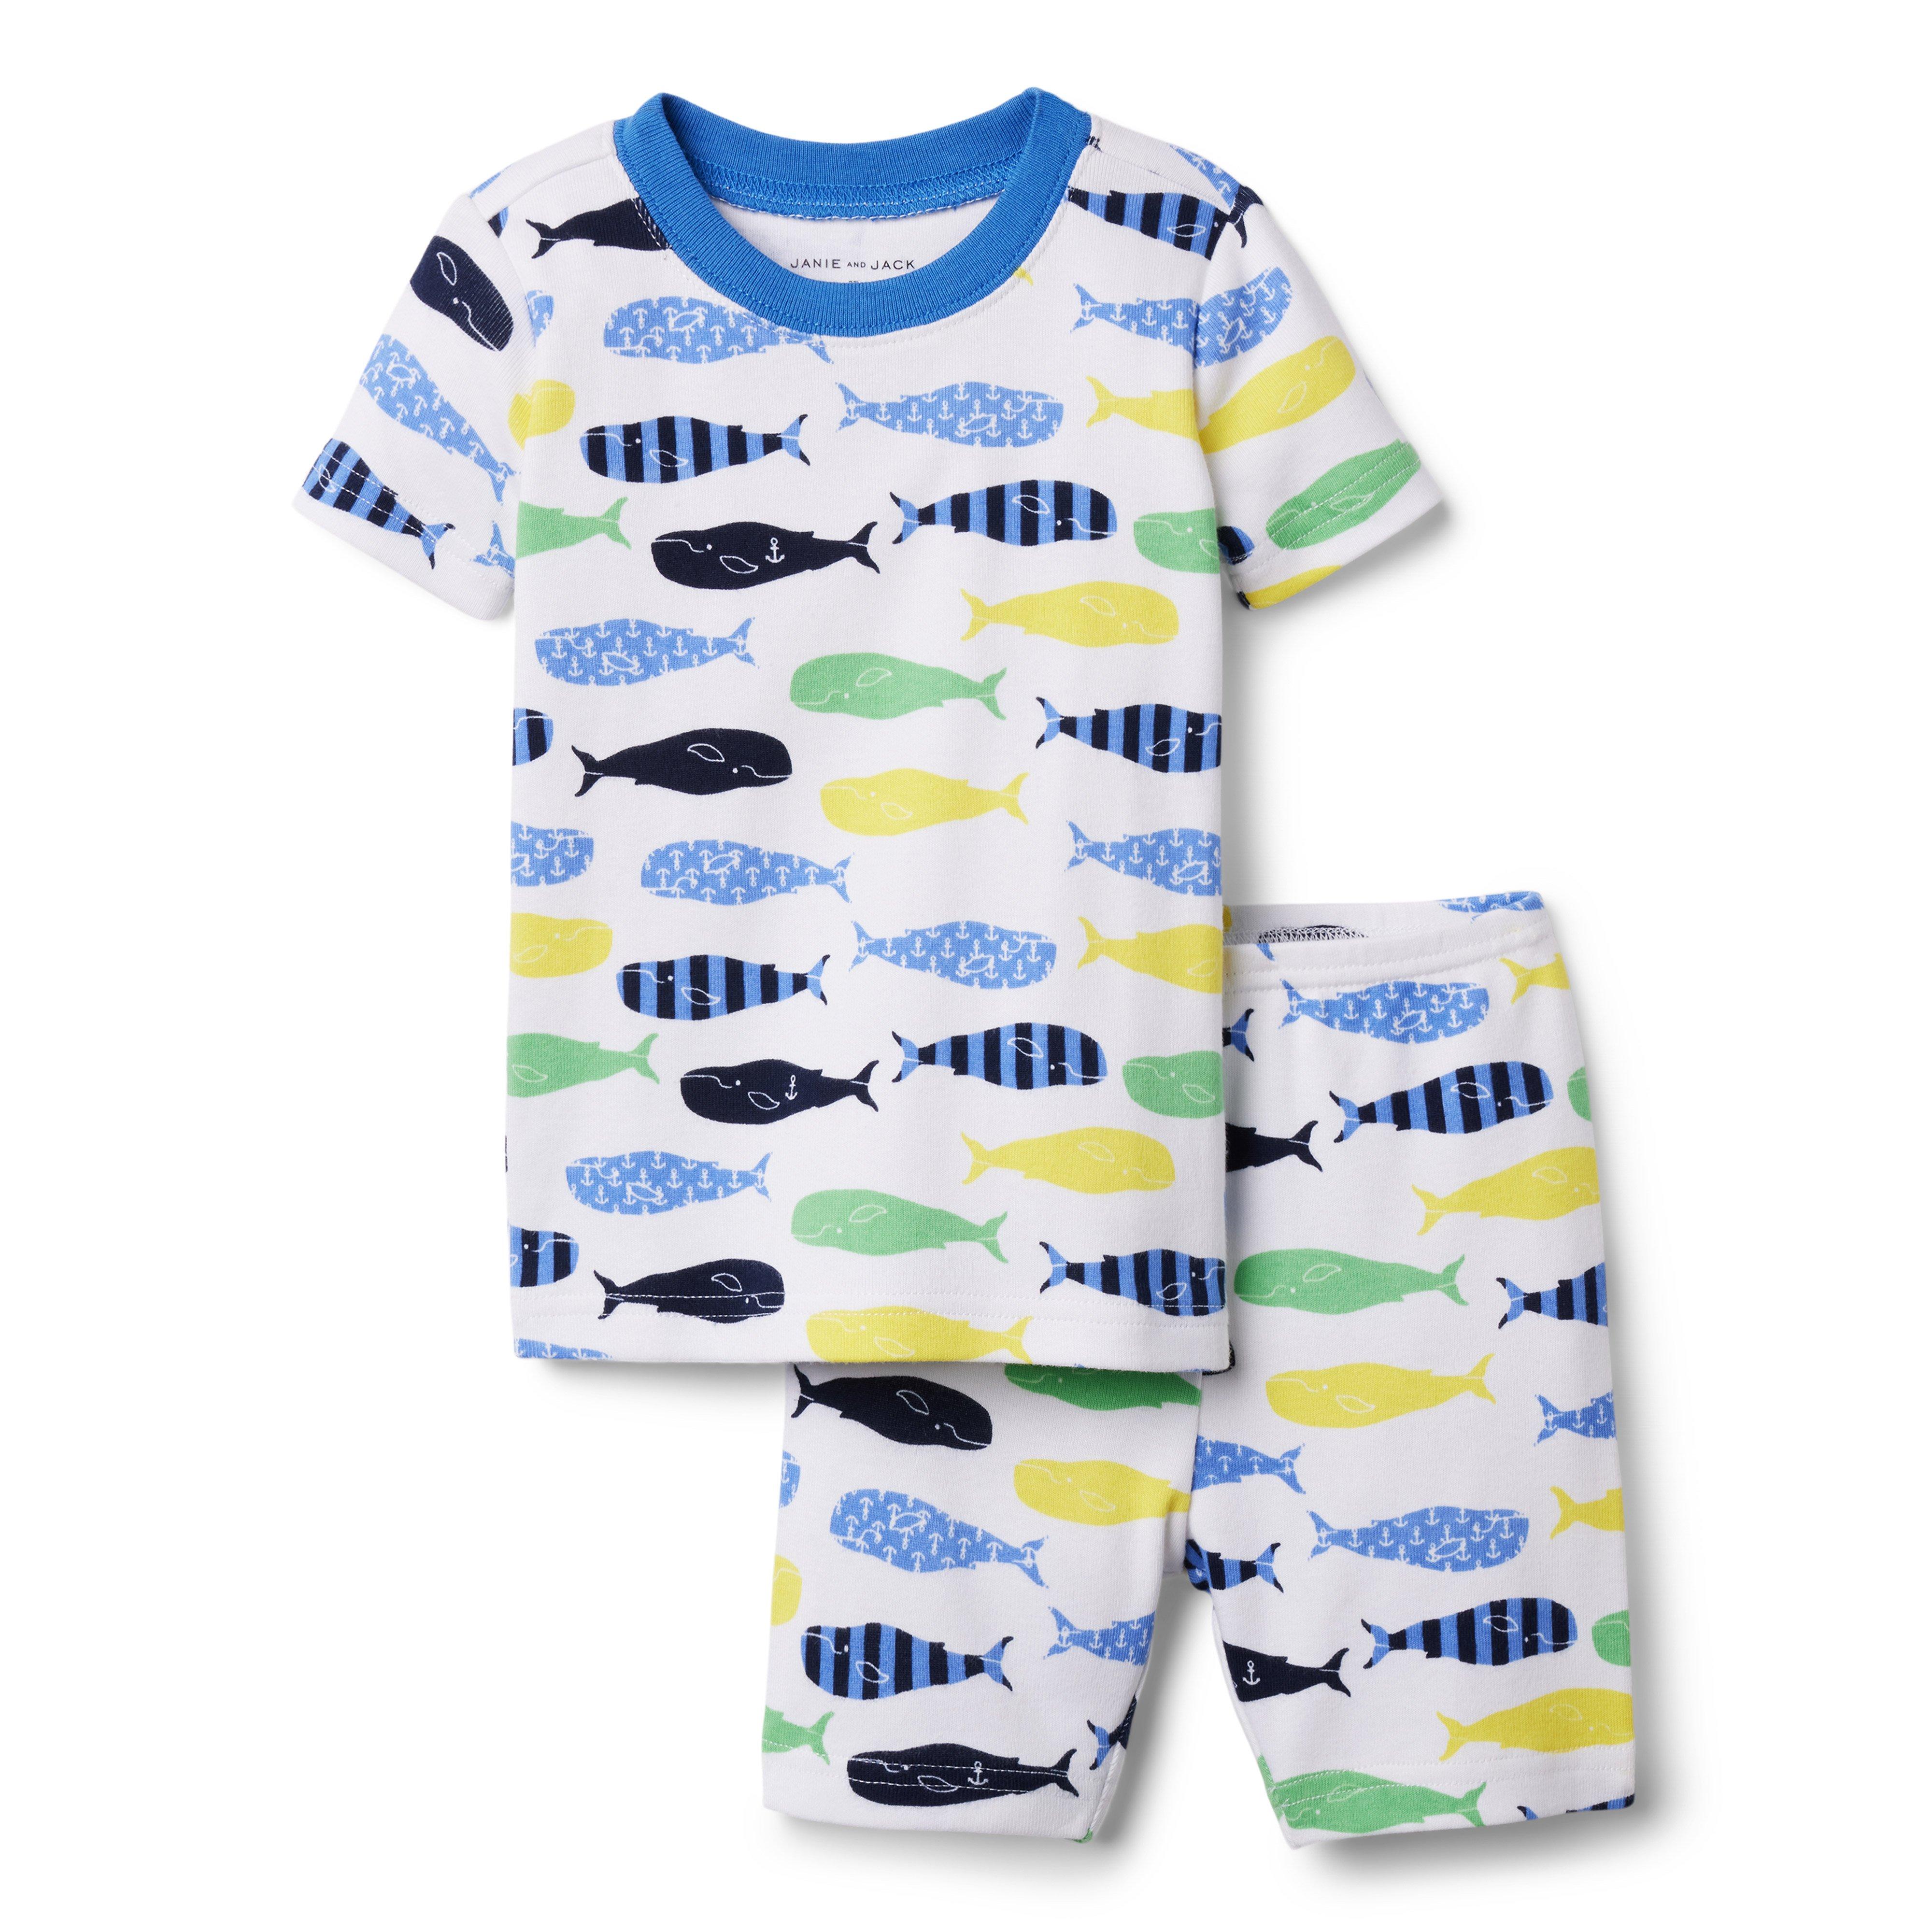 Boy White Whale Print Whale Short Pajama Set by Janie and Jack